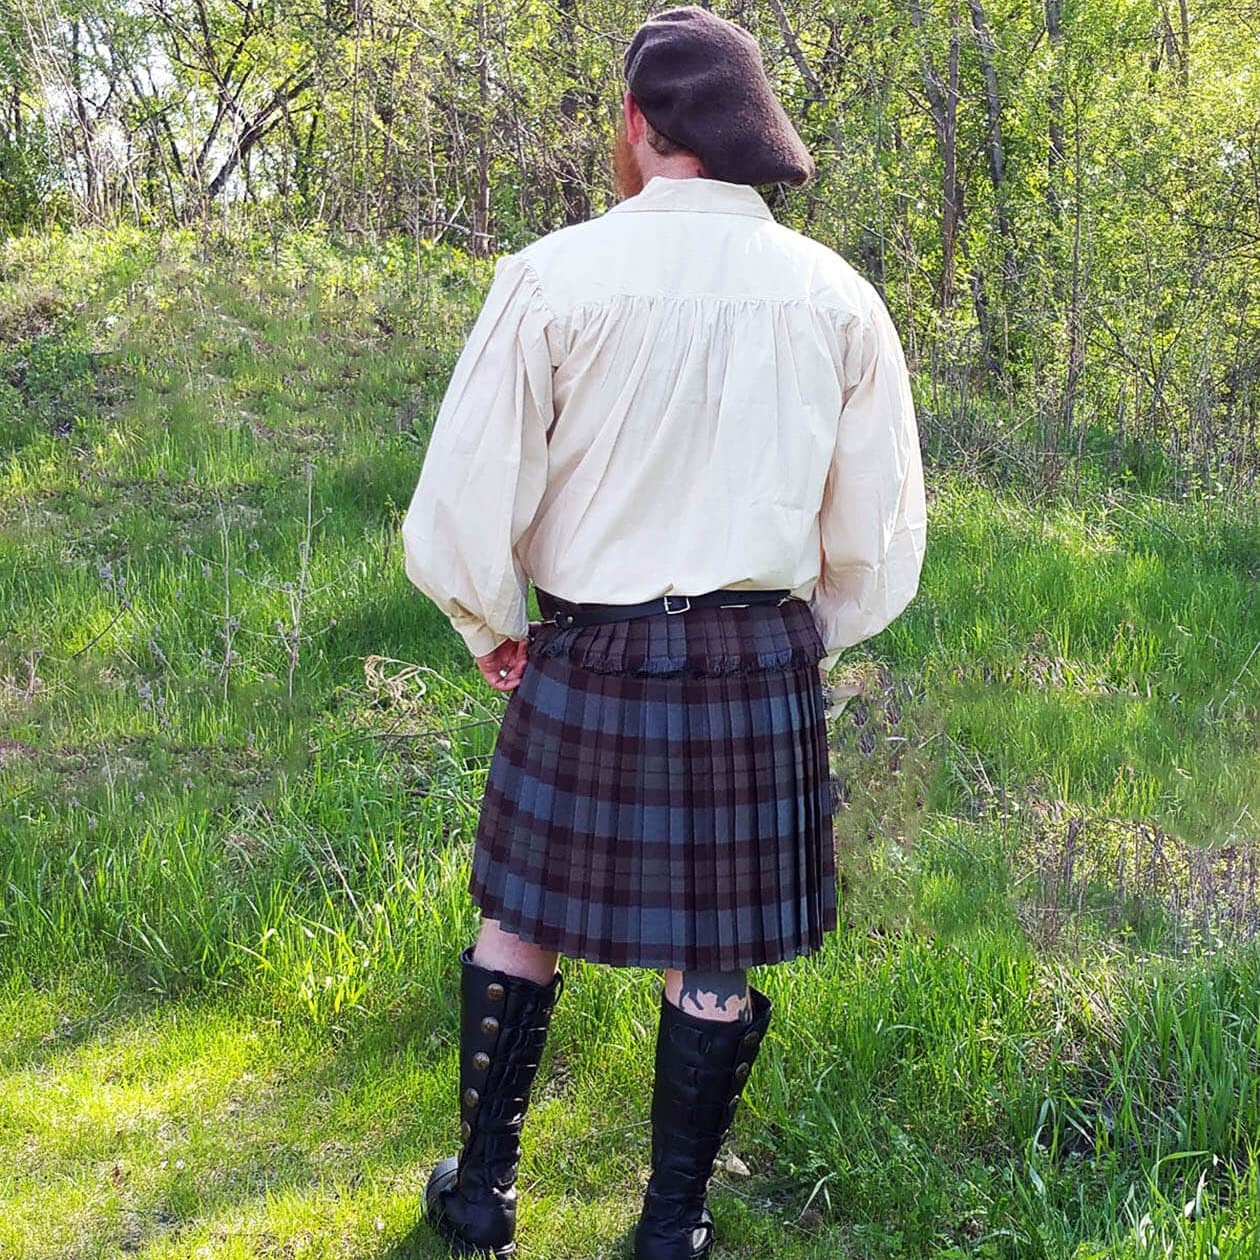 Scottish Highland Men's Traditional 6-yard wool blend TARTAN KILT-23 CLANS! 